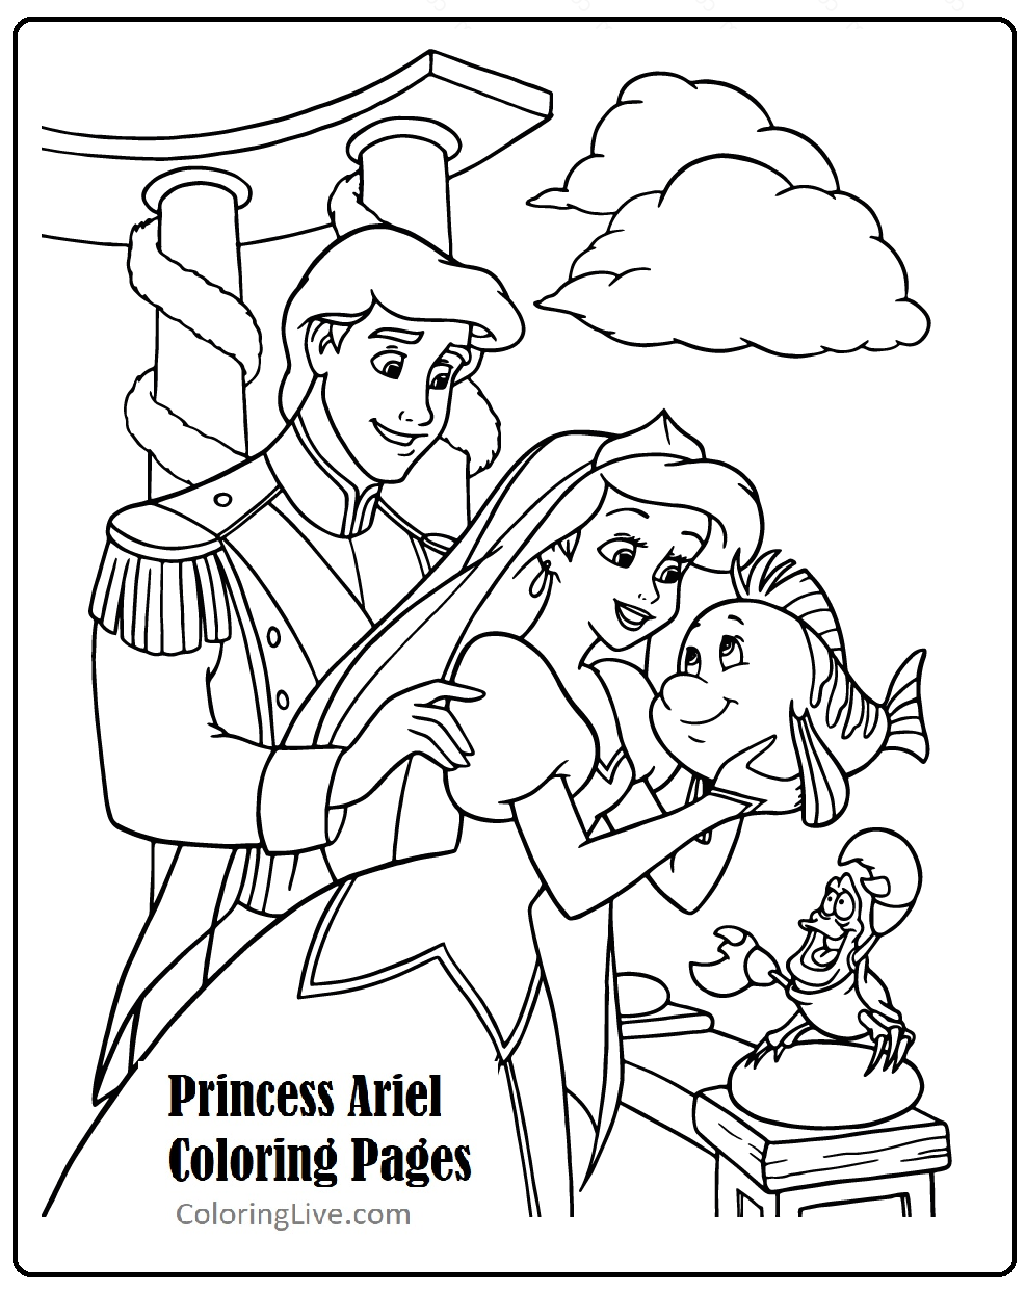 Princess Ariel talking to Flounder Coloring Page - SheetalColor.com